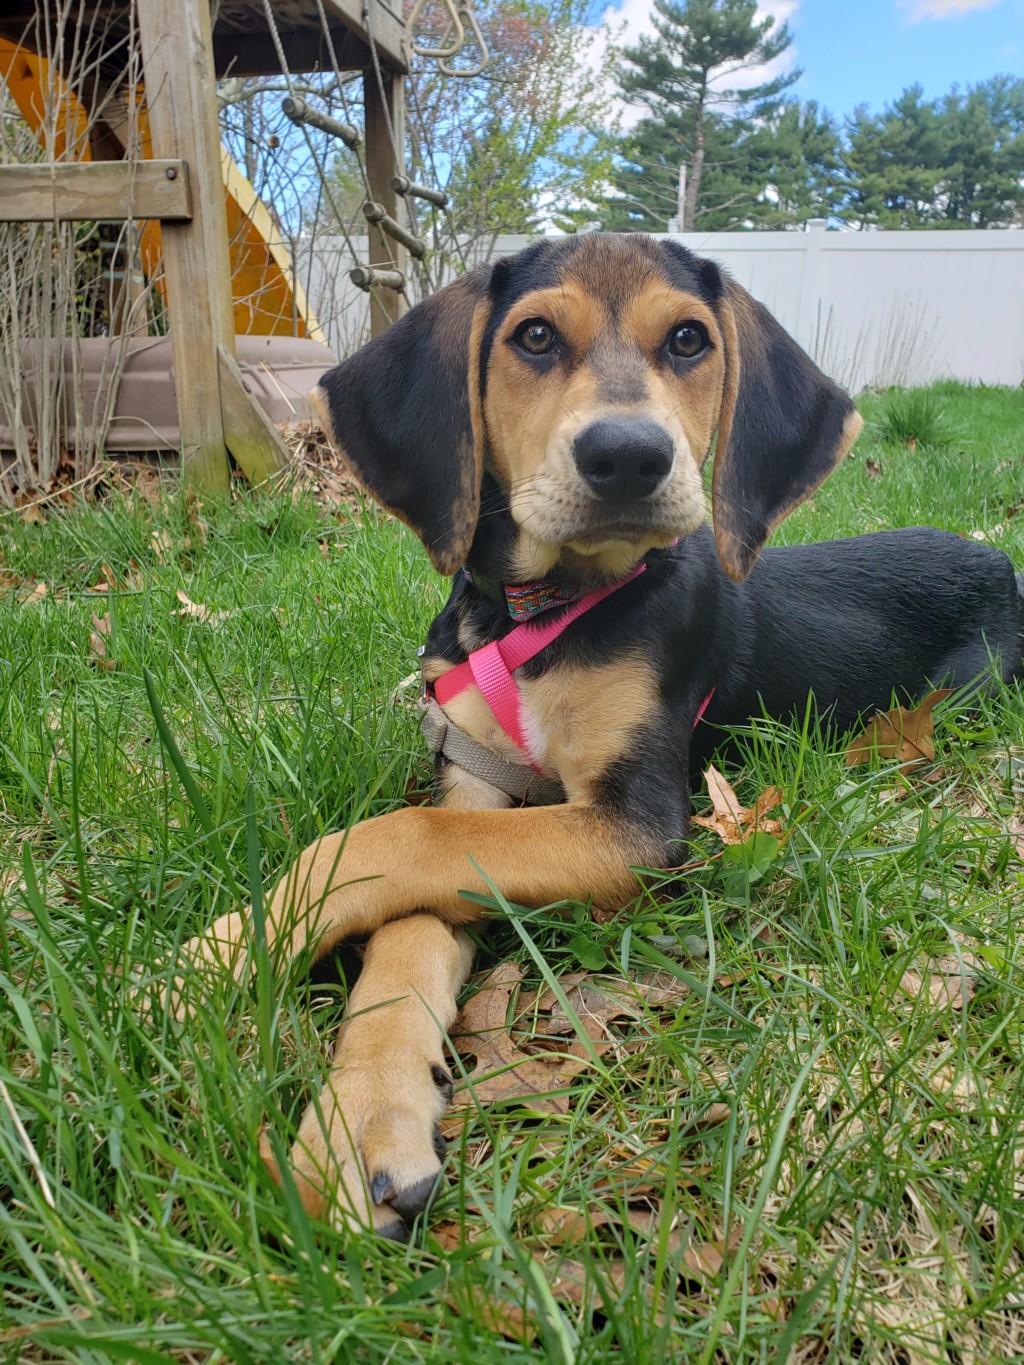 getting a puppy - Boston Moms Blog